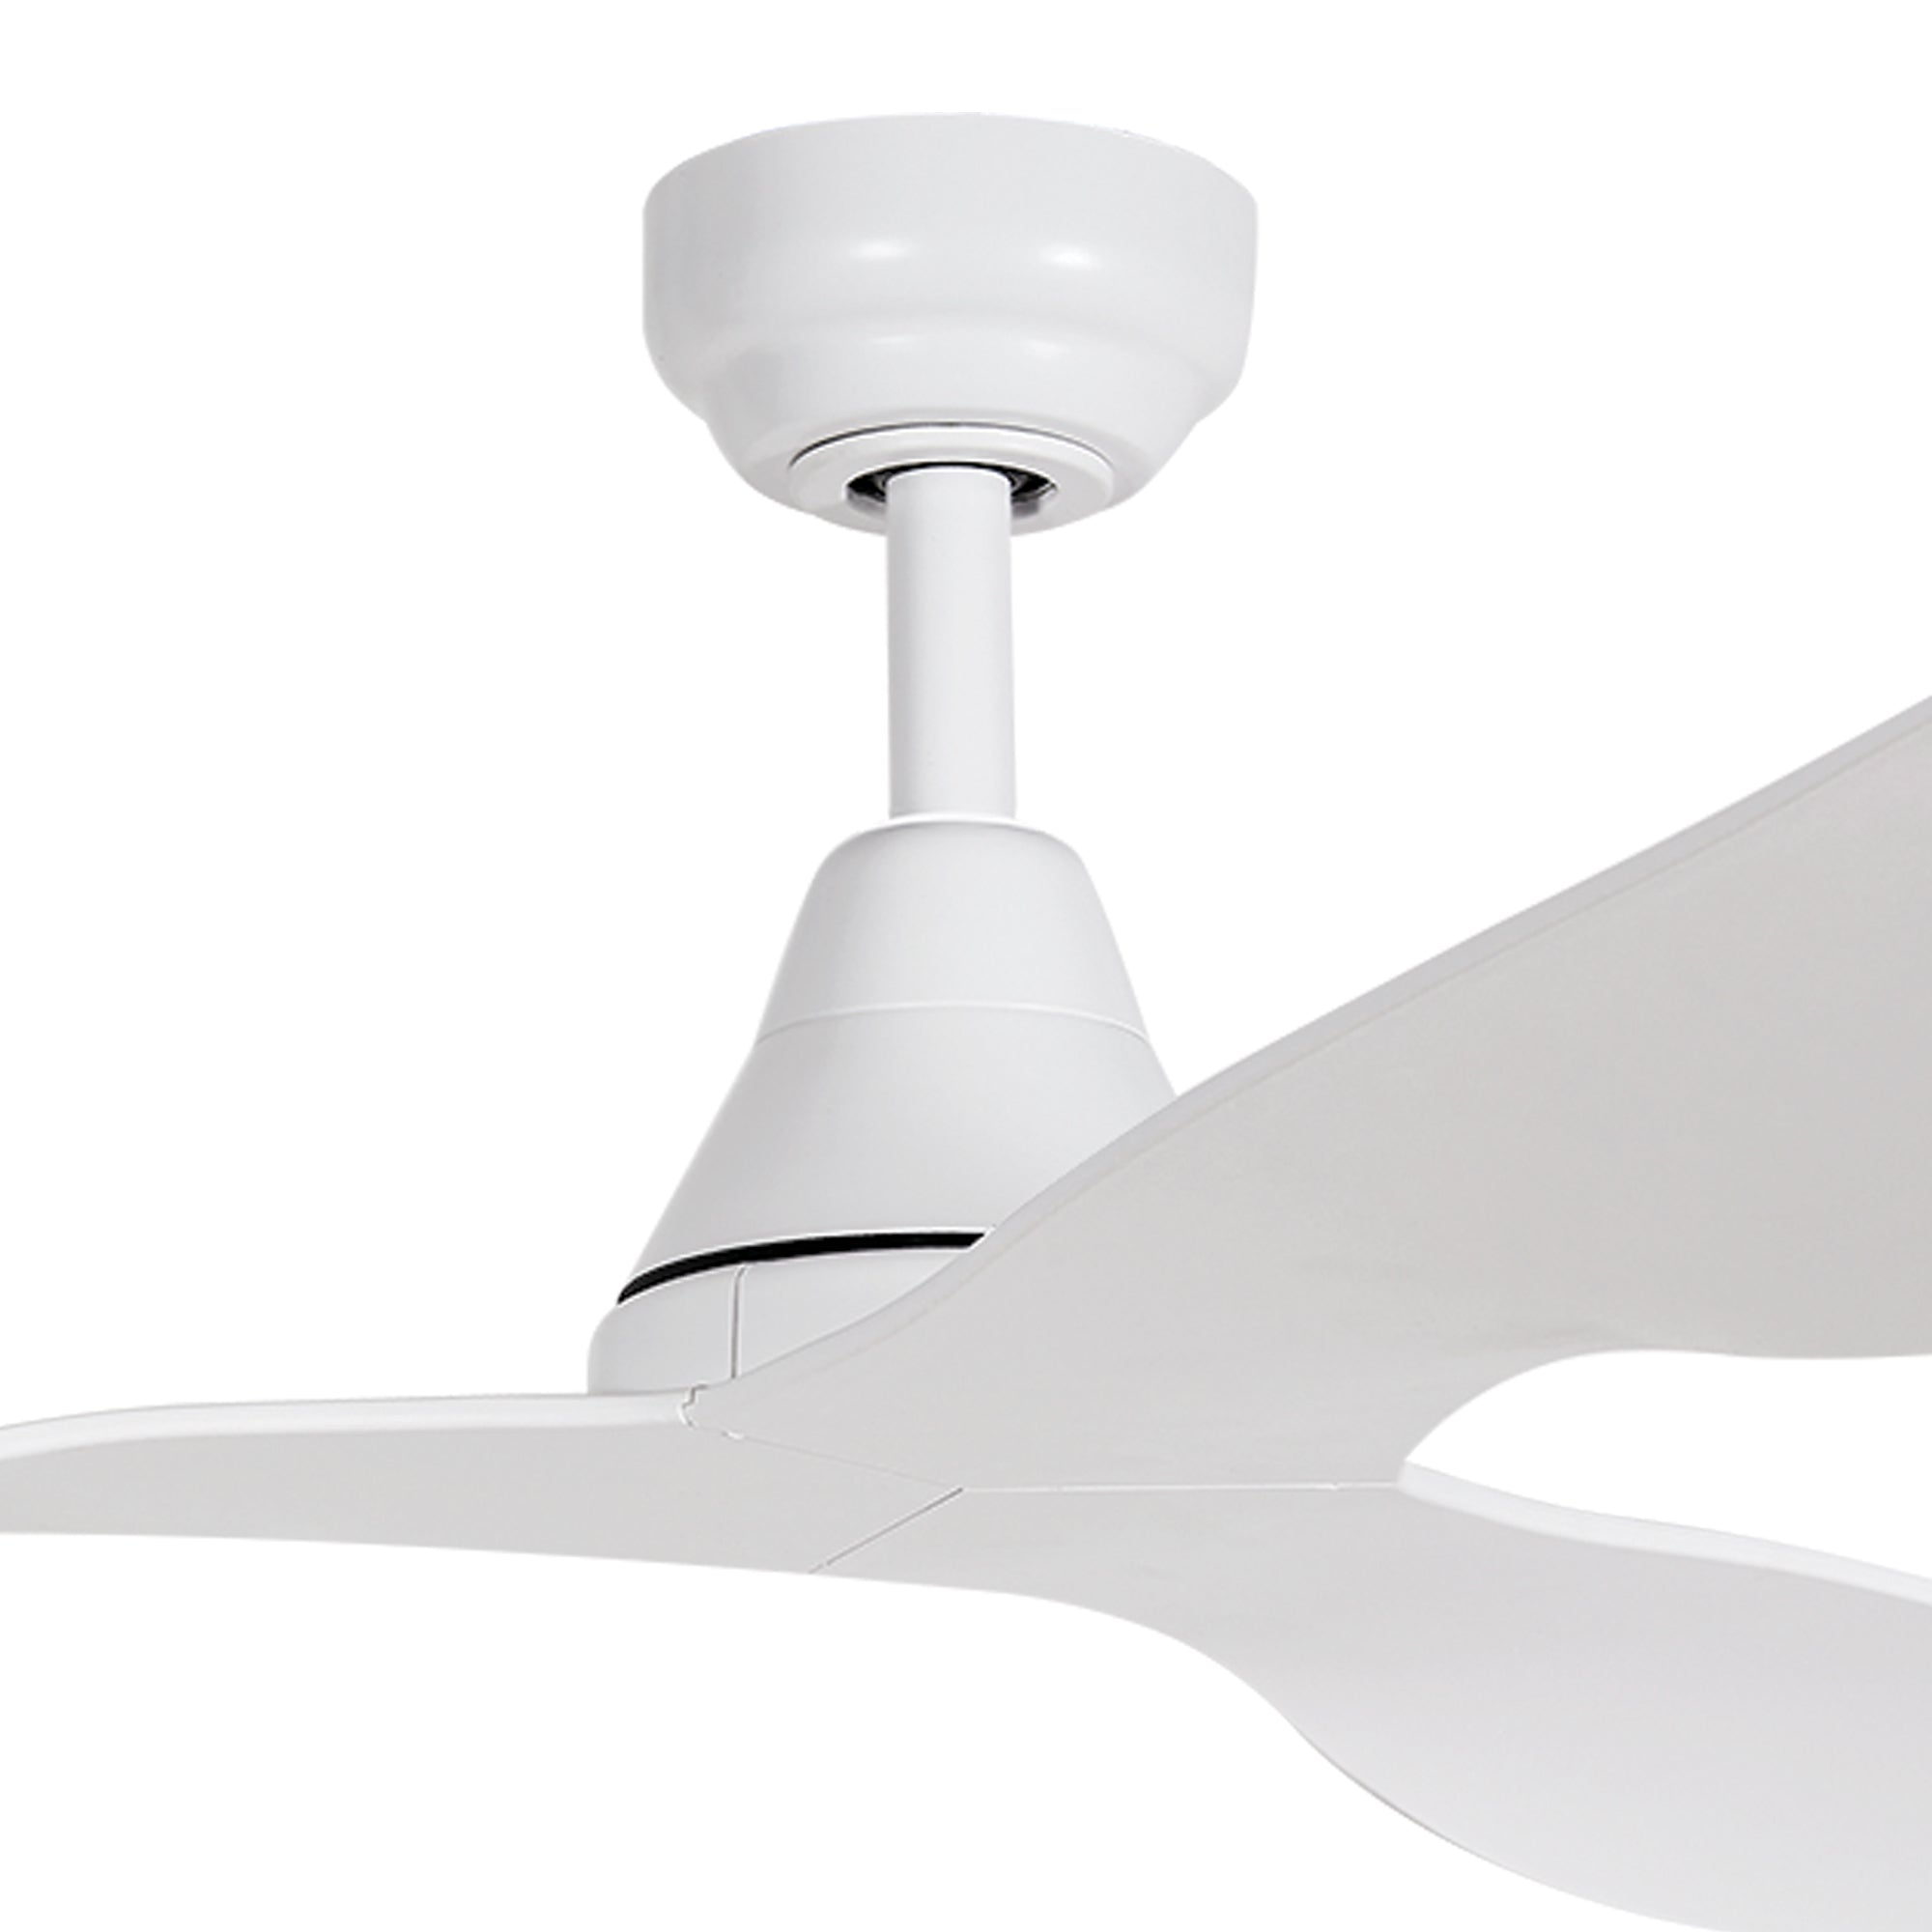 360Fans Simplicity 52″ (132cm) White 3 Blade DC Ceiling Fan & Remote Control